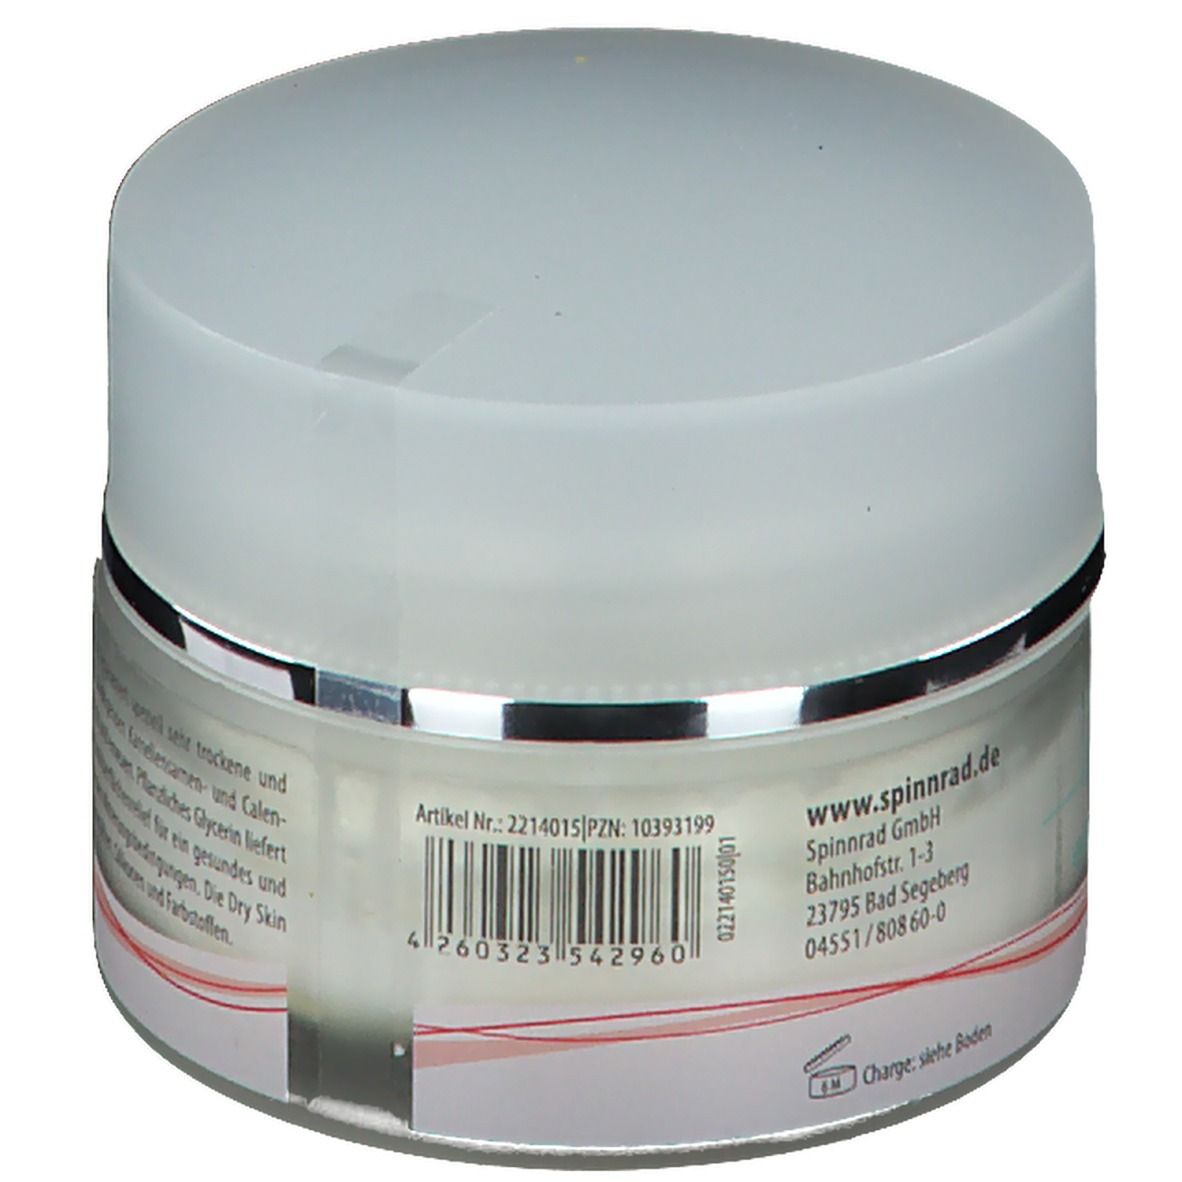 Spinnrad® Dry Skin Calendulacreme